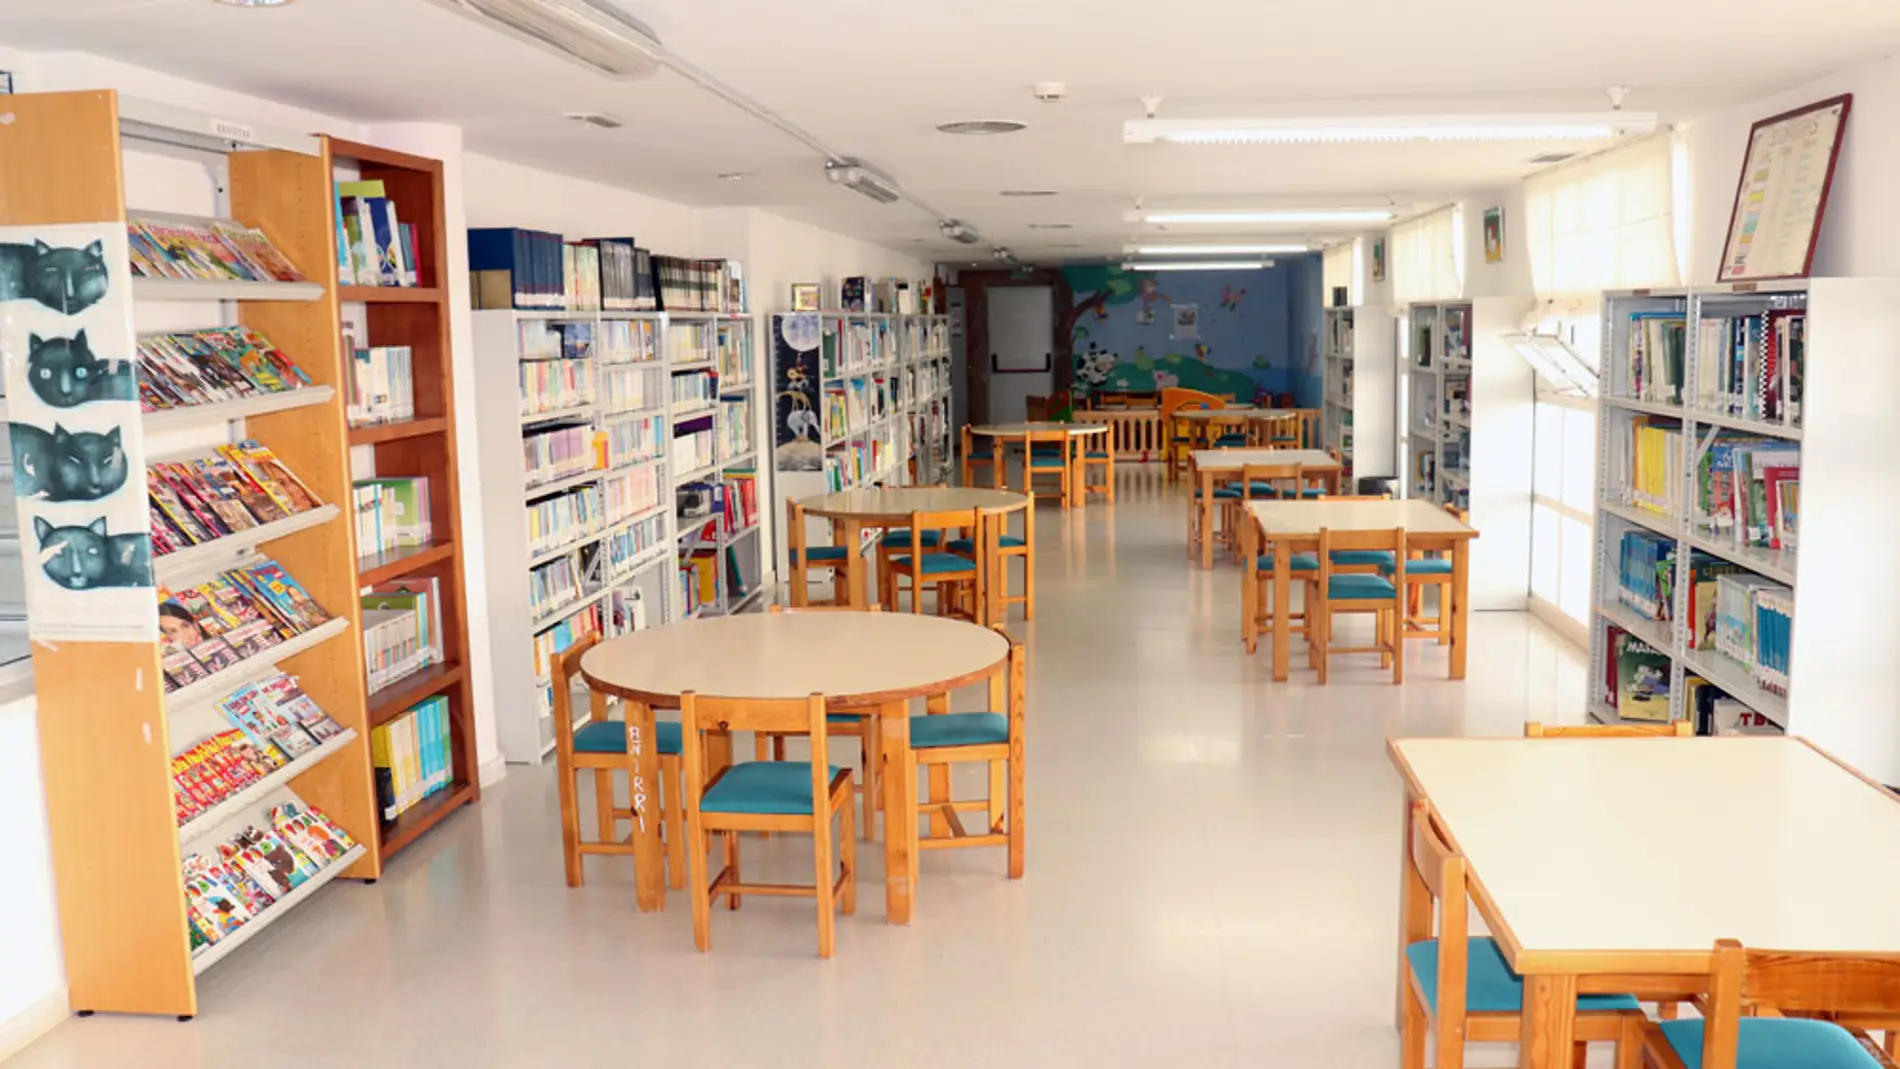 Sala infantil de la biblioteca pública de Puerto Real